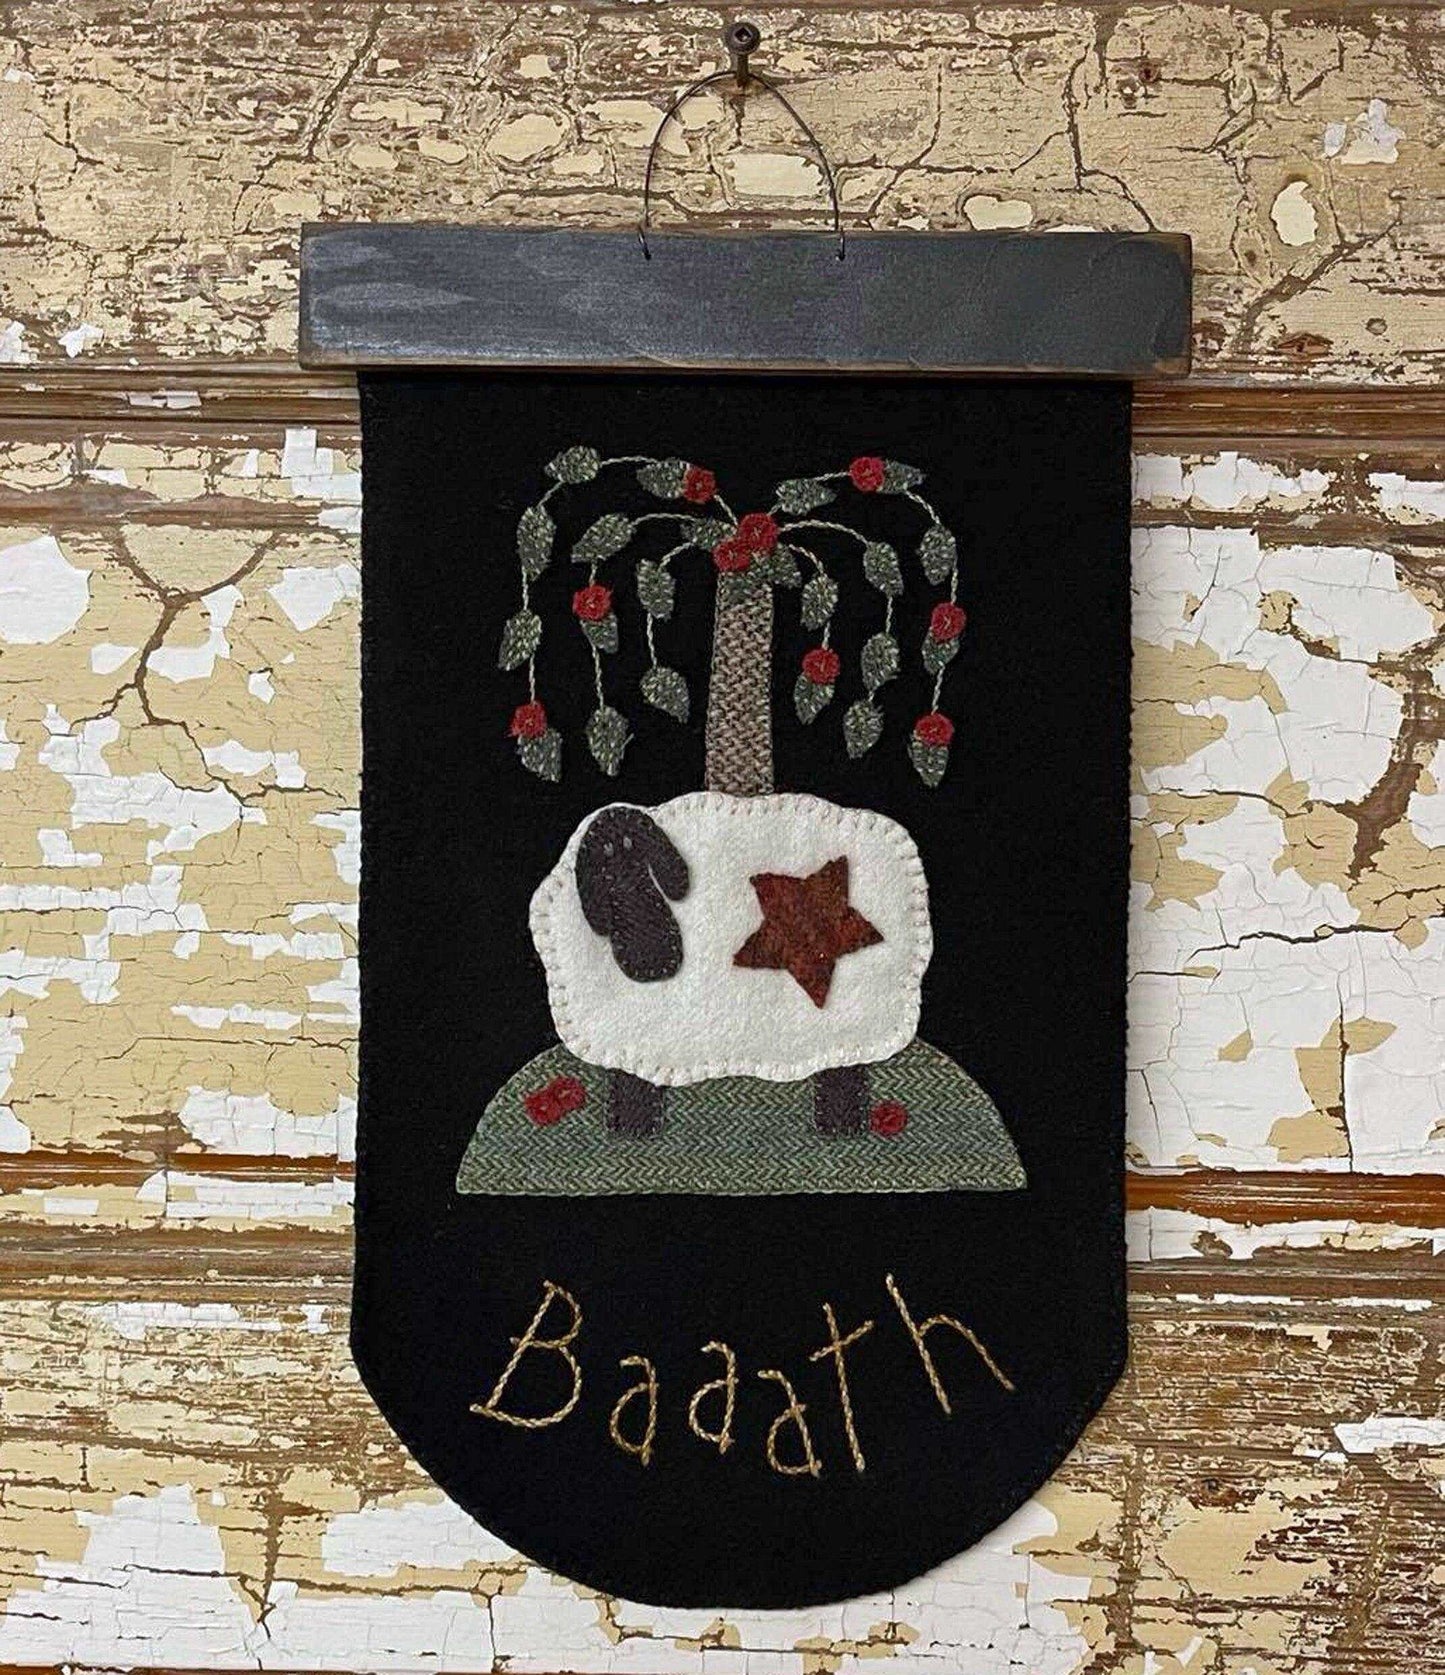 Baaath FLAG Kit - All About Ewe Wool Shop